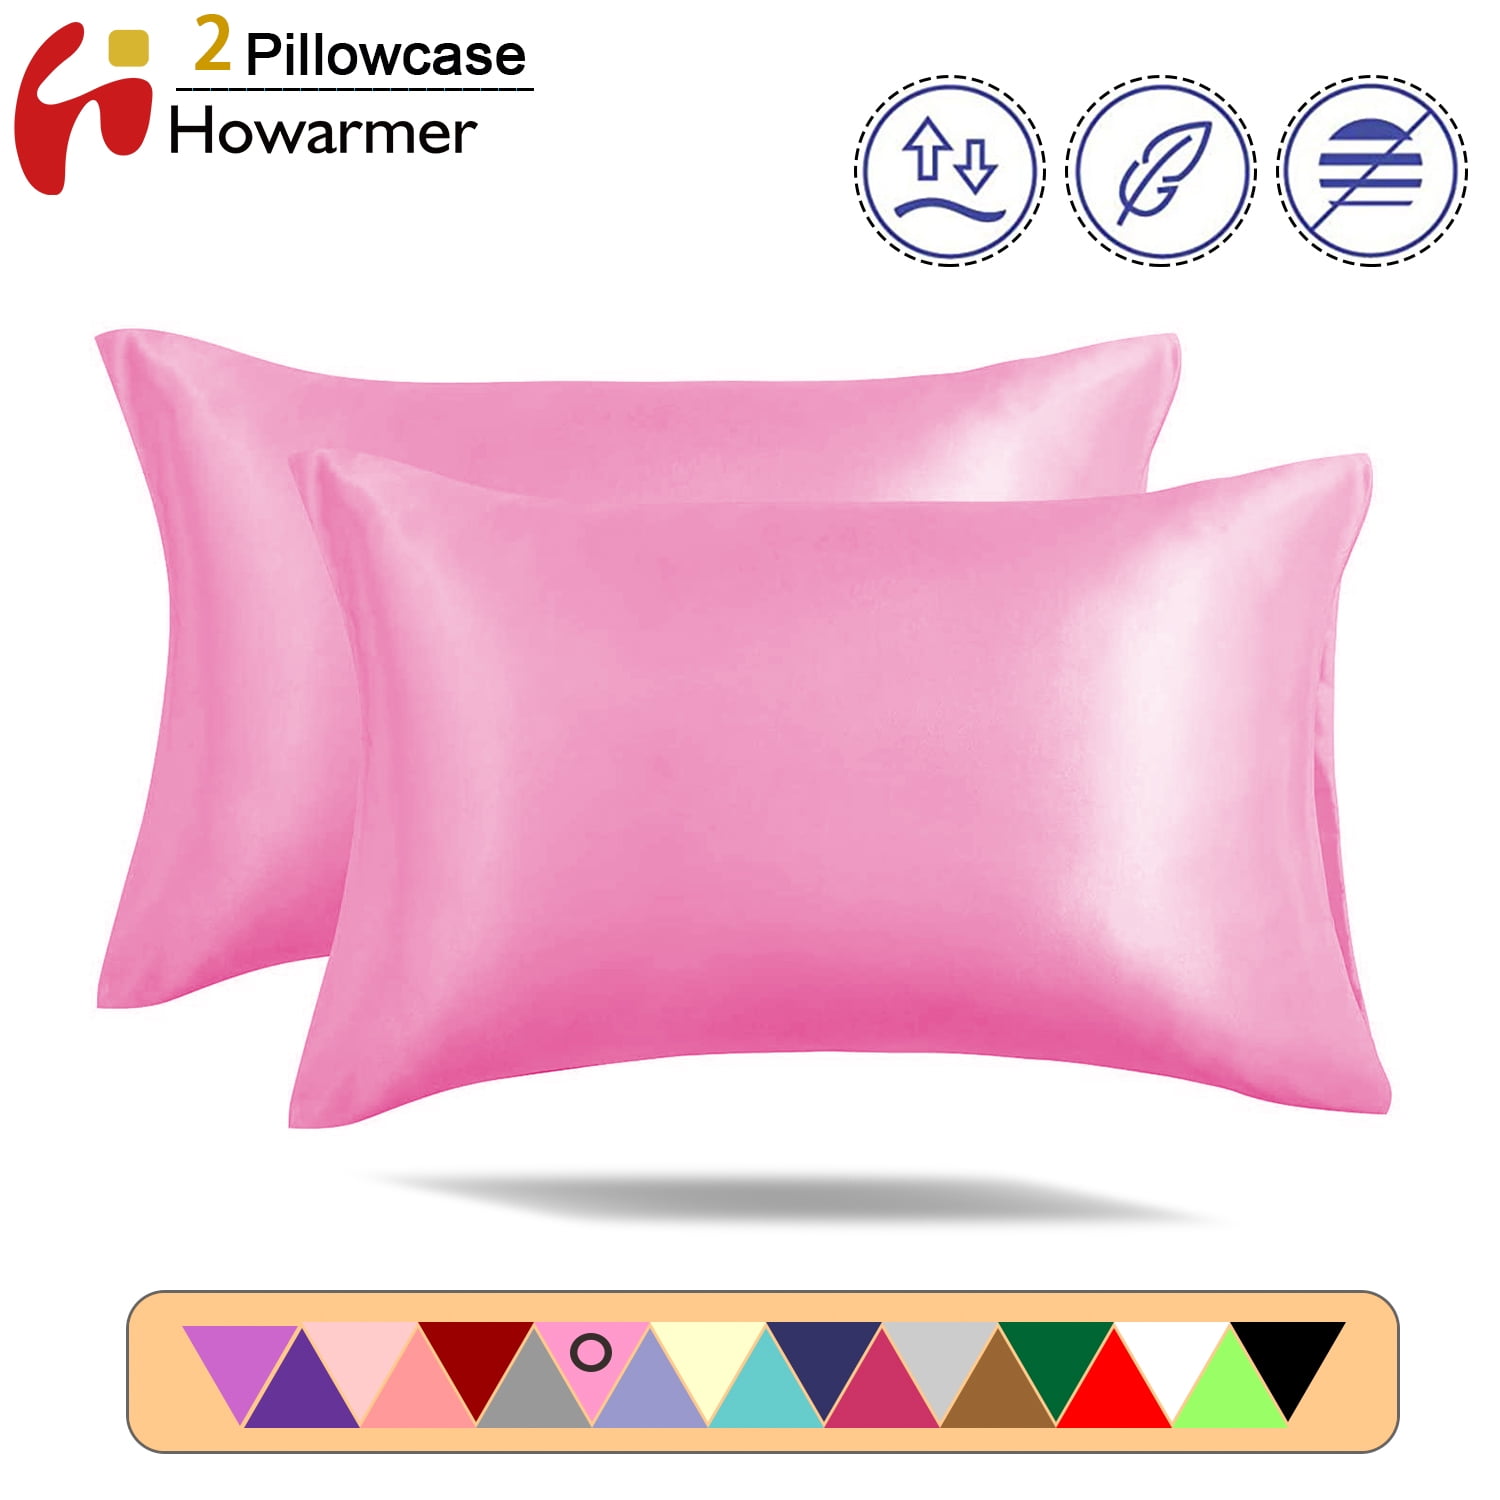 Details about   Pink swirls fuchsia pink leaves pillowcase pillow case standard size Queen 